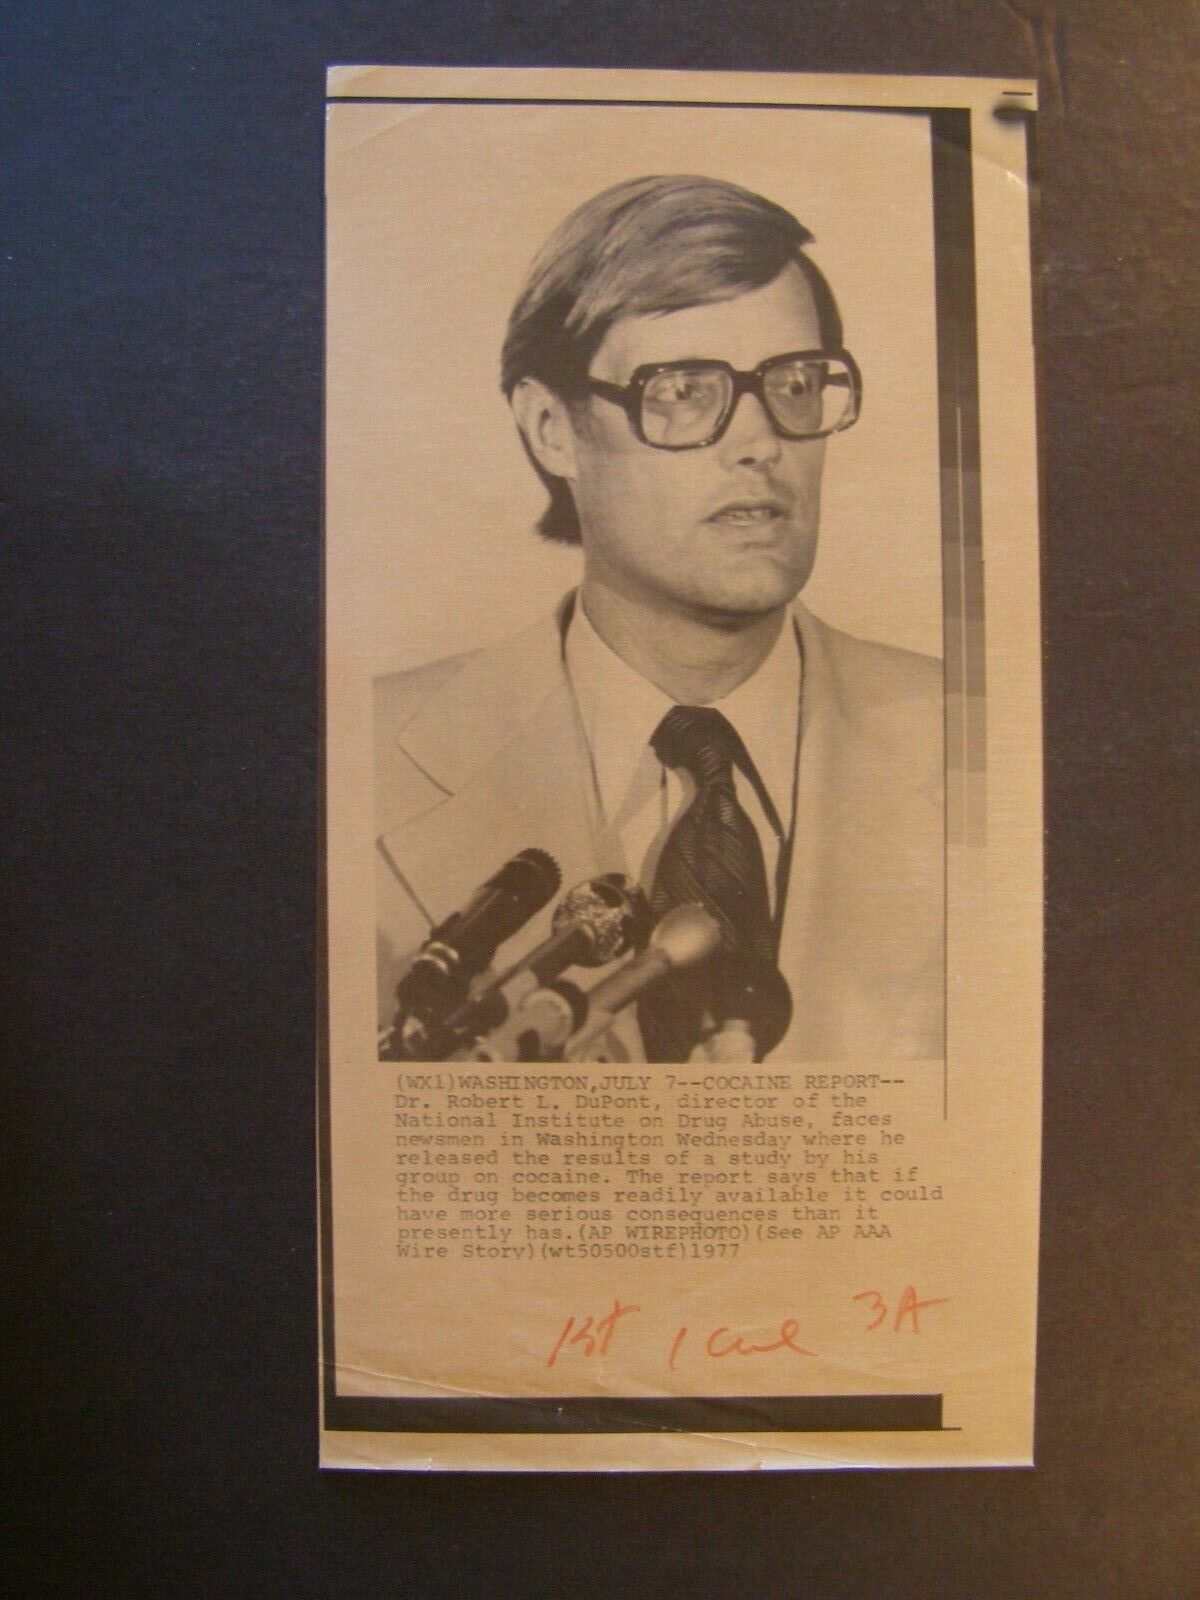 AP Wire Press Photo 1977 Dr Robert L Dupont Dir Natl Inst on Drug Abuse Cocaine 